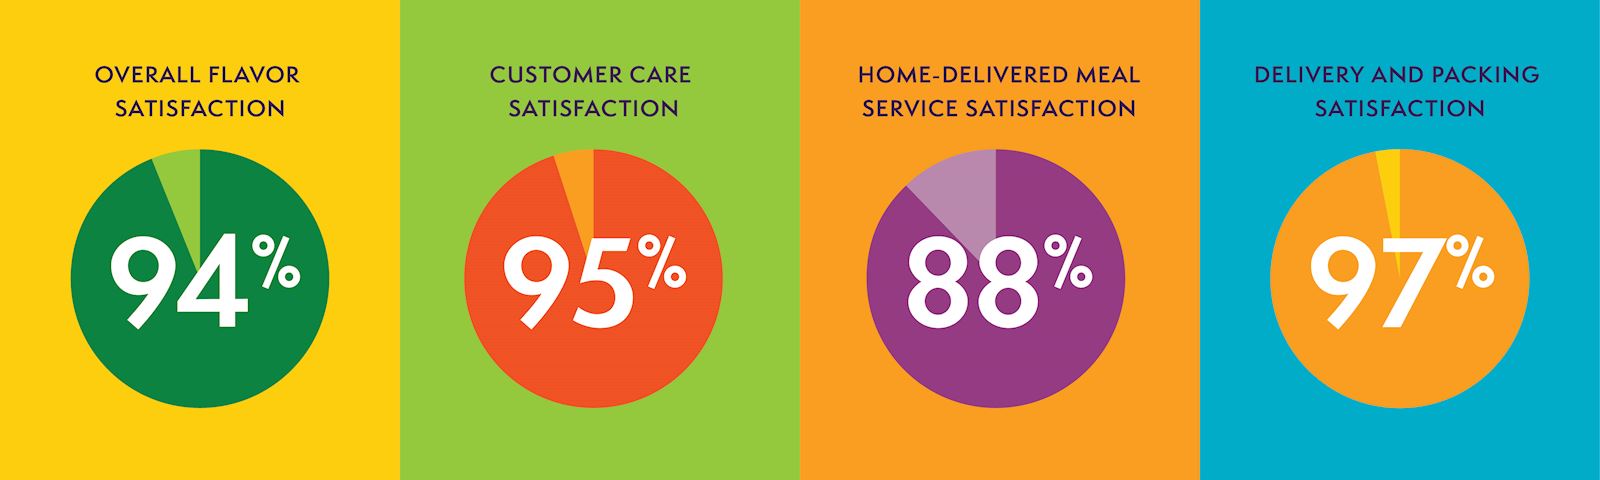 Customer Care Satisfaction